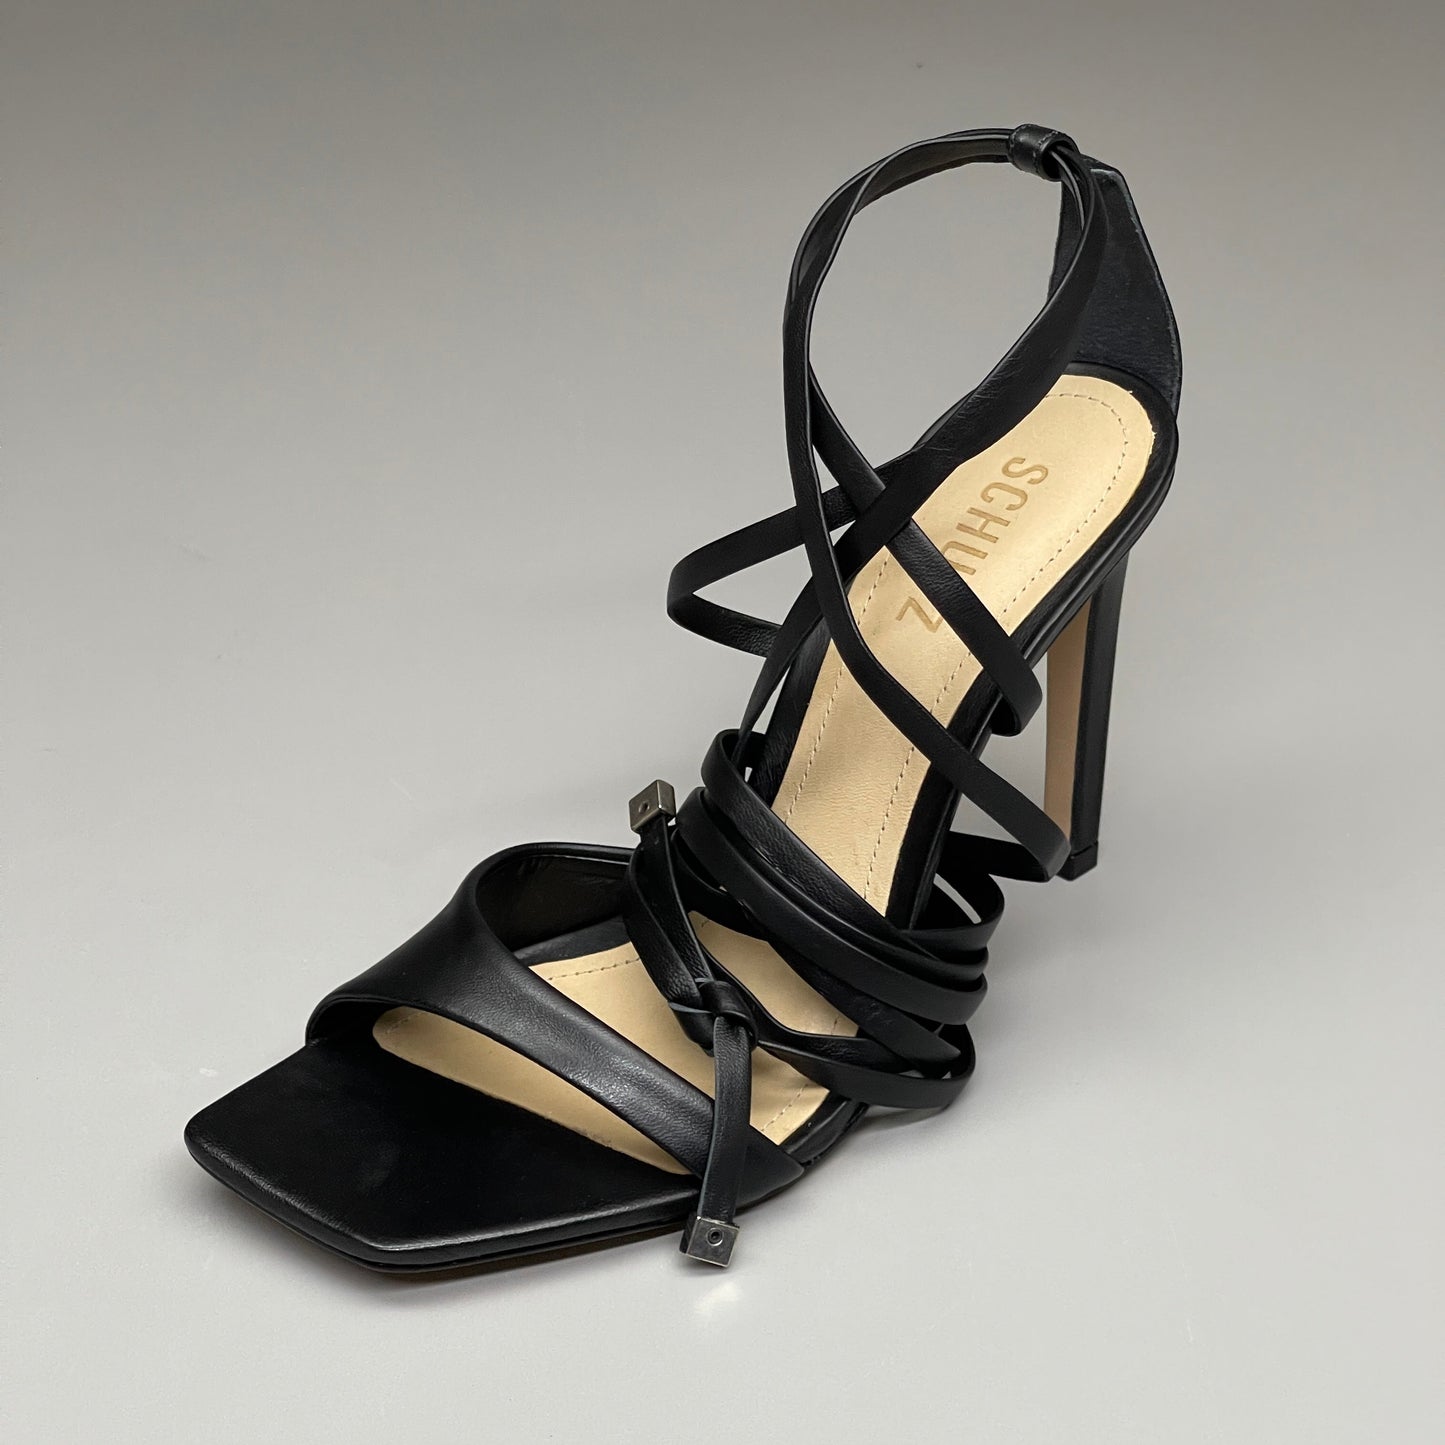 SCHUTZ Bryce Ankle Tie Women's Leather High Heel Strappy Sandal Black Sz 8.5B (New)